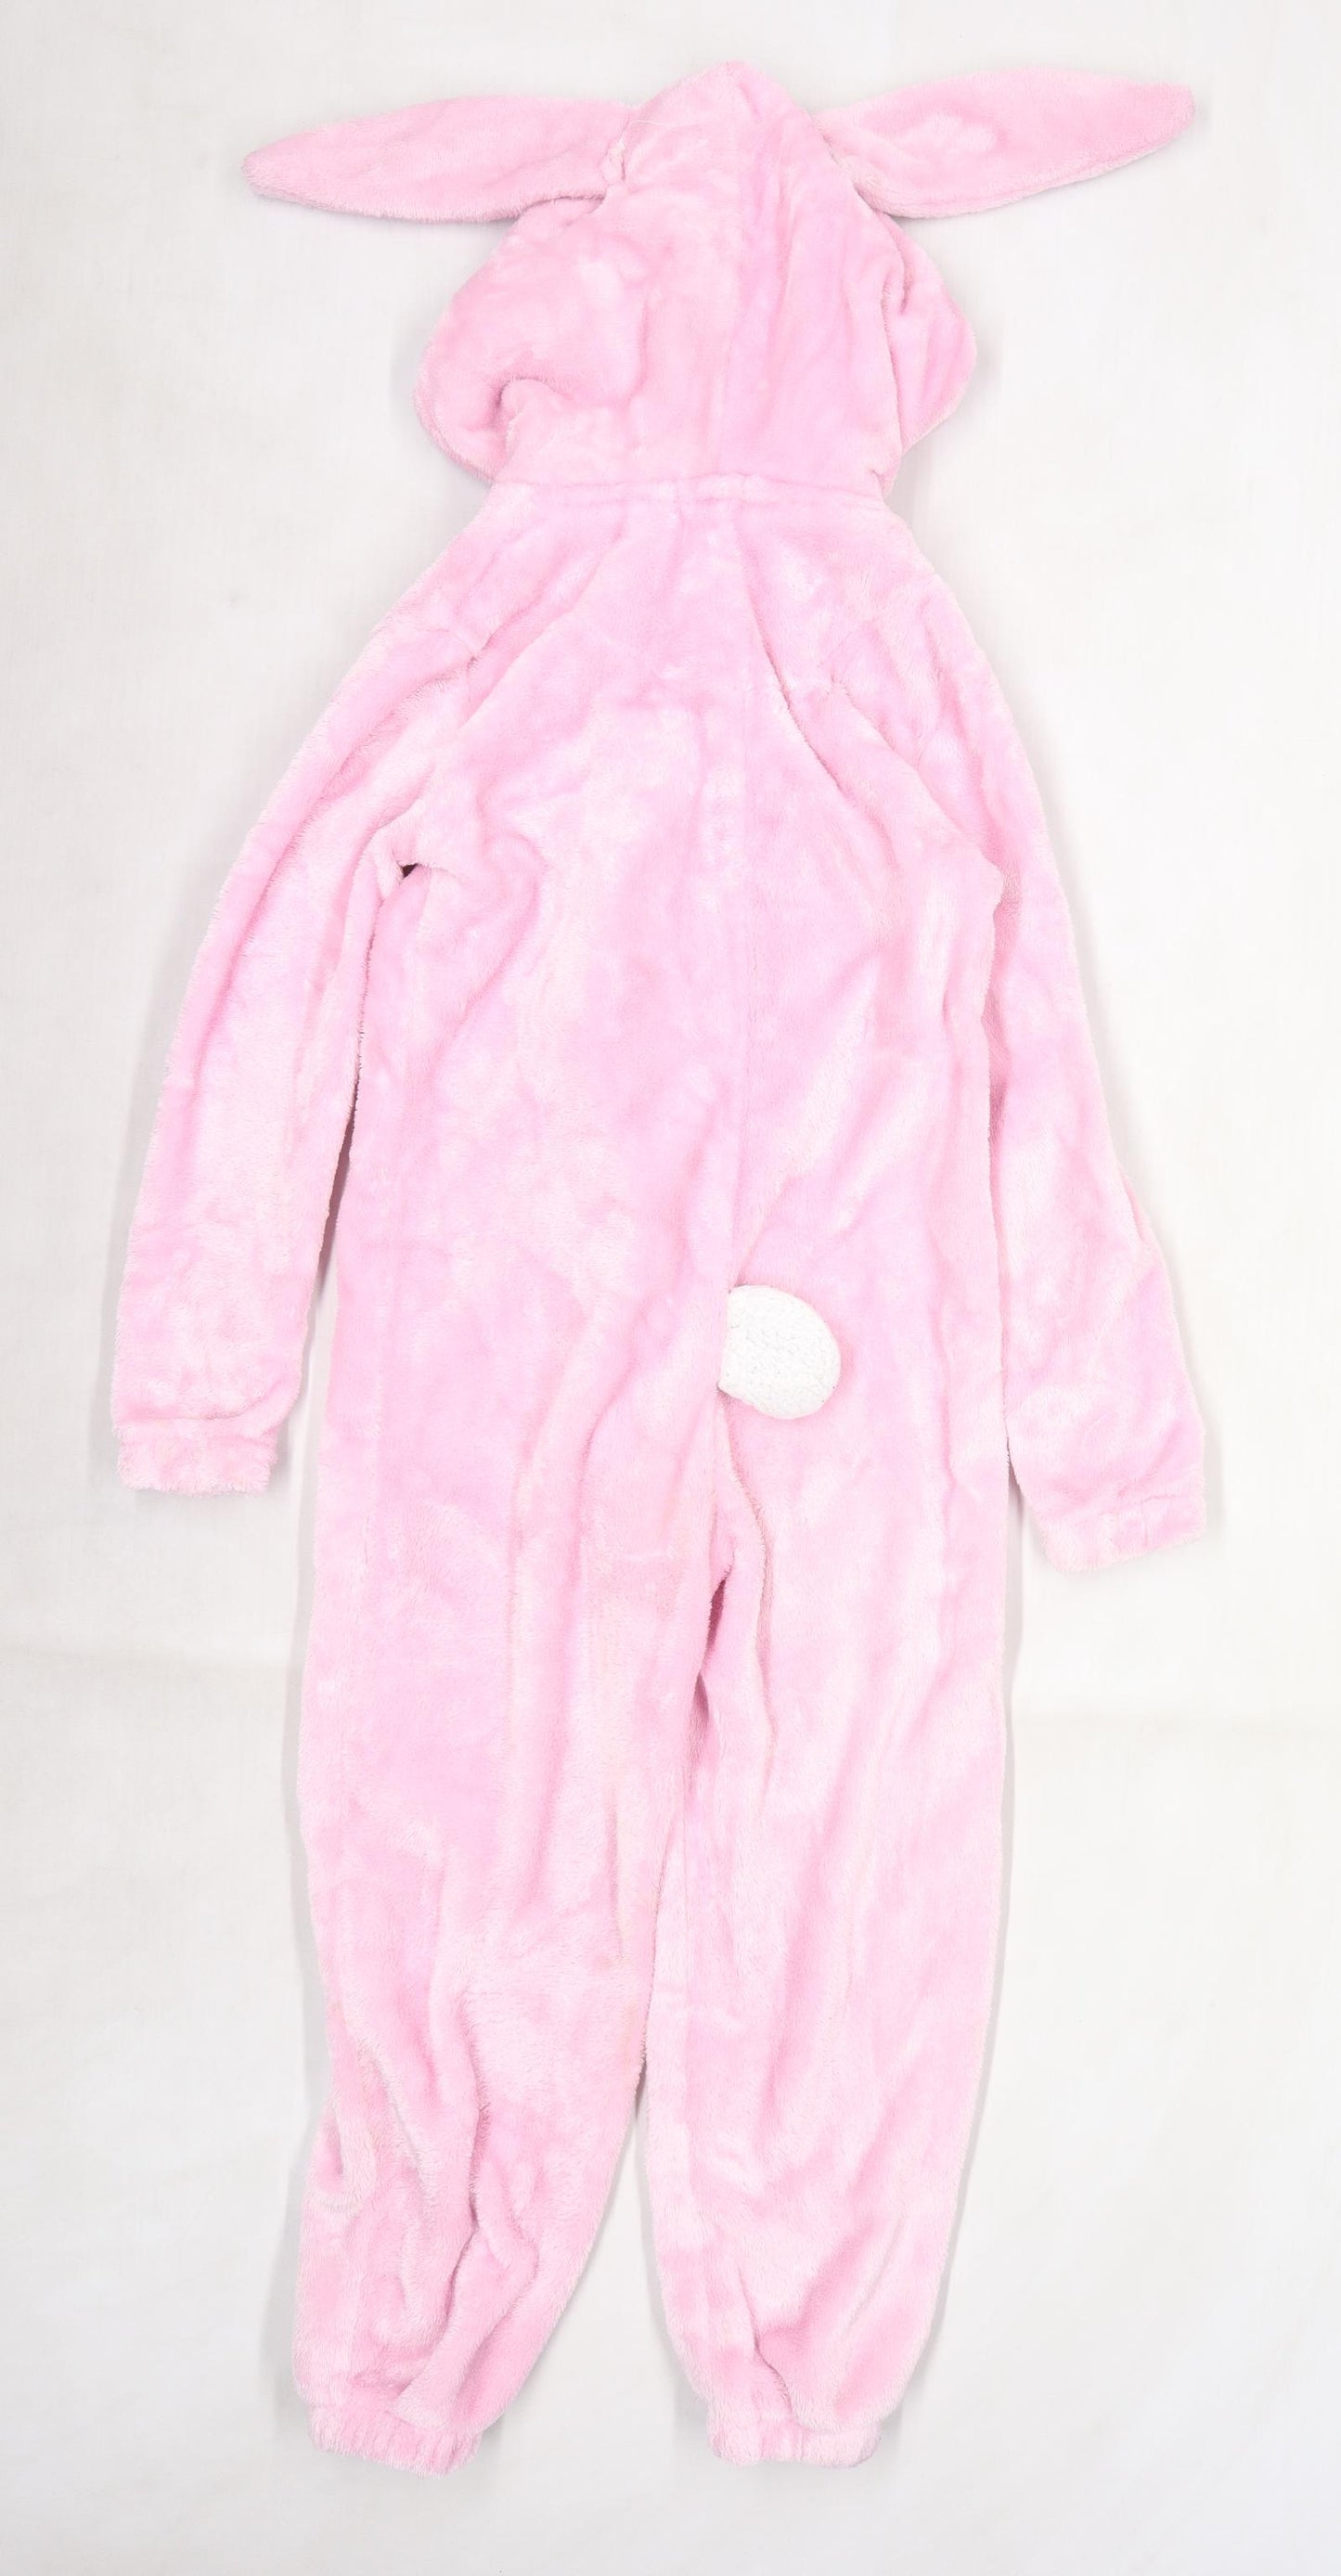 Ginger Girls Pink  Fleece Top One Piece Size 7-8 Years  - Bunny Rabbit Ears Hood